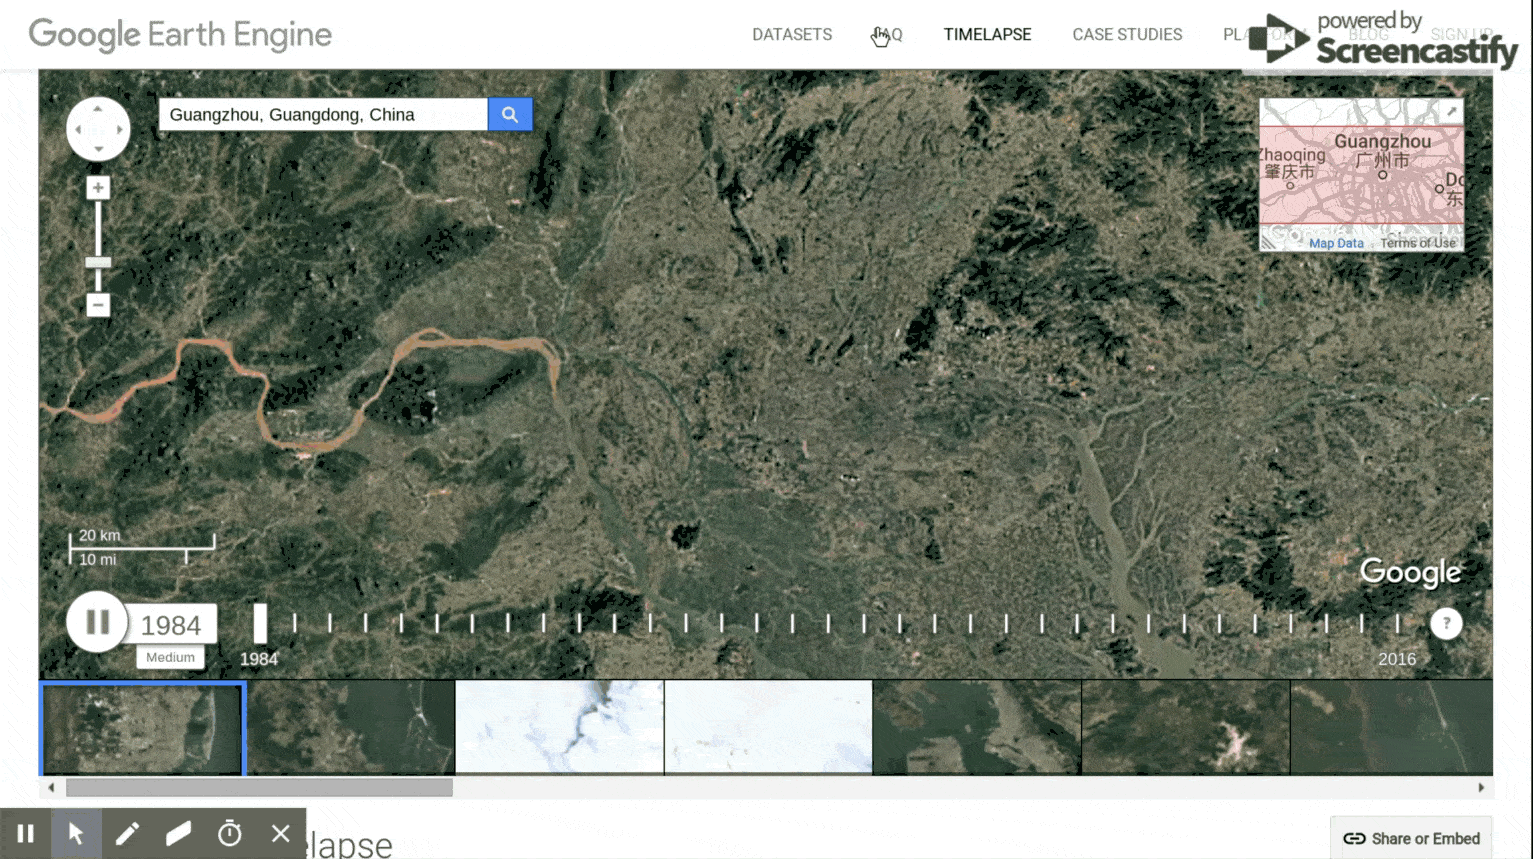 Timelapse Google Earth Engine - Edited